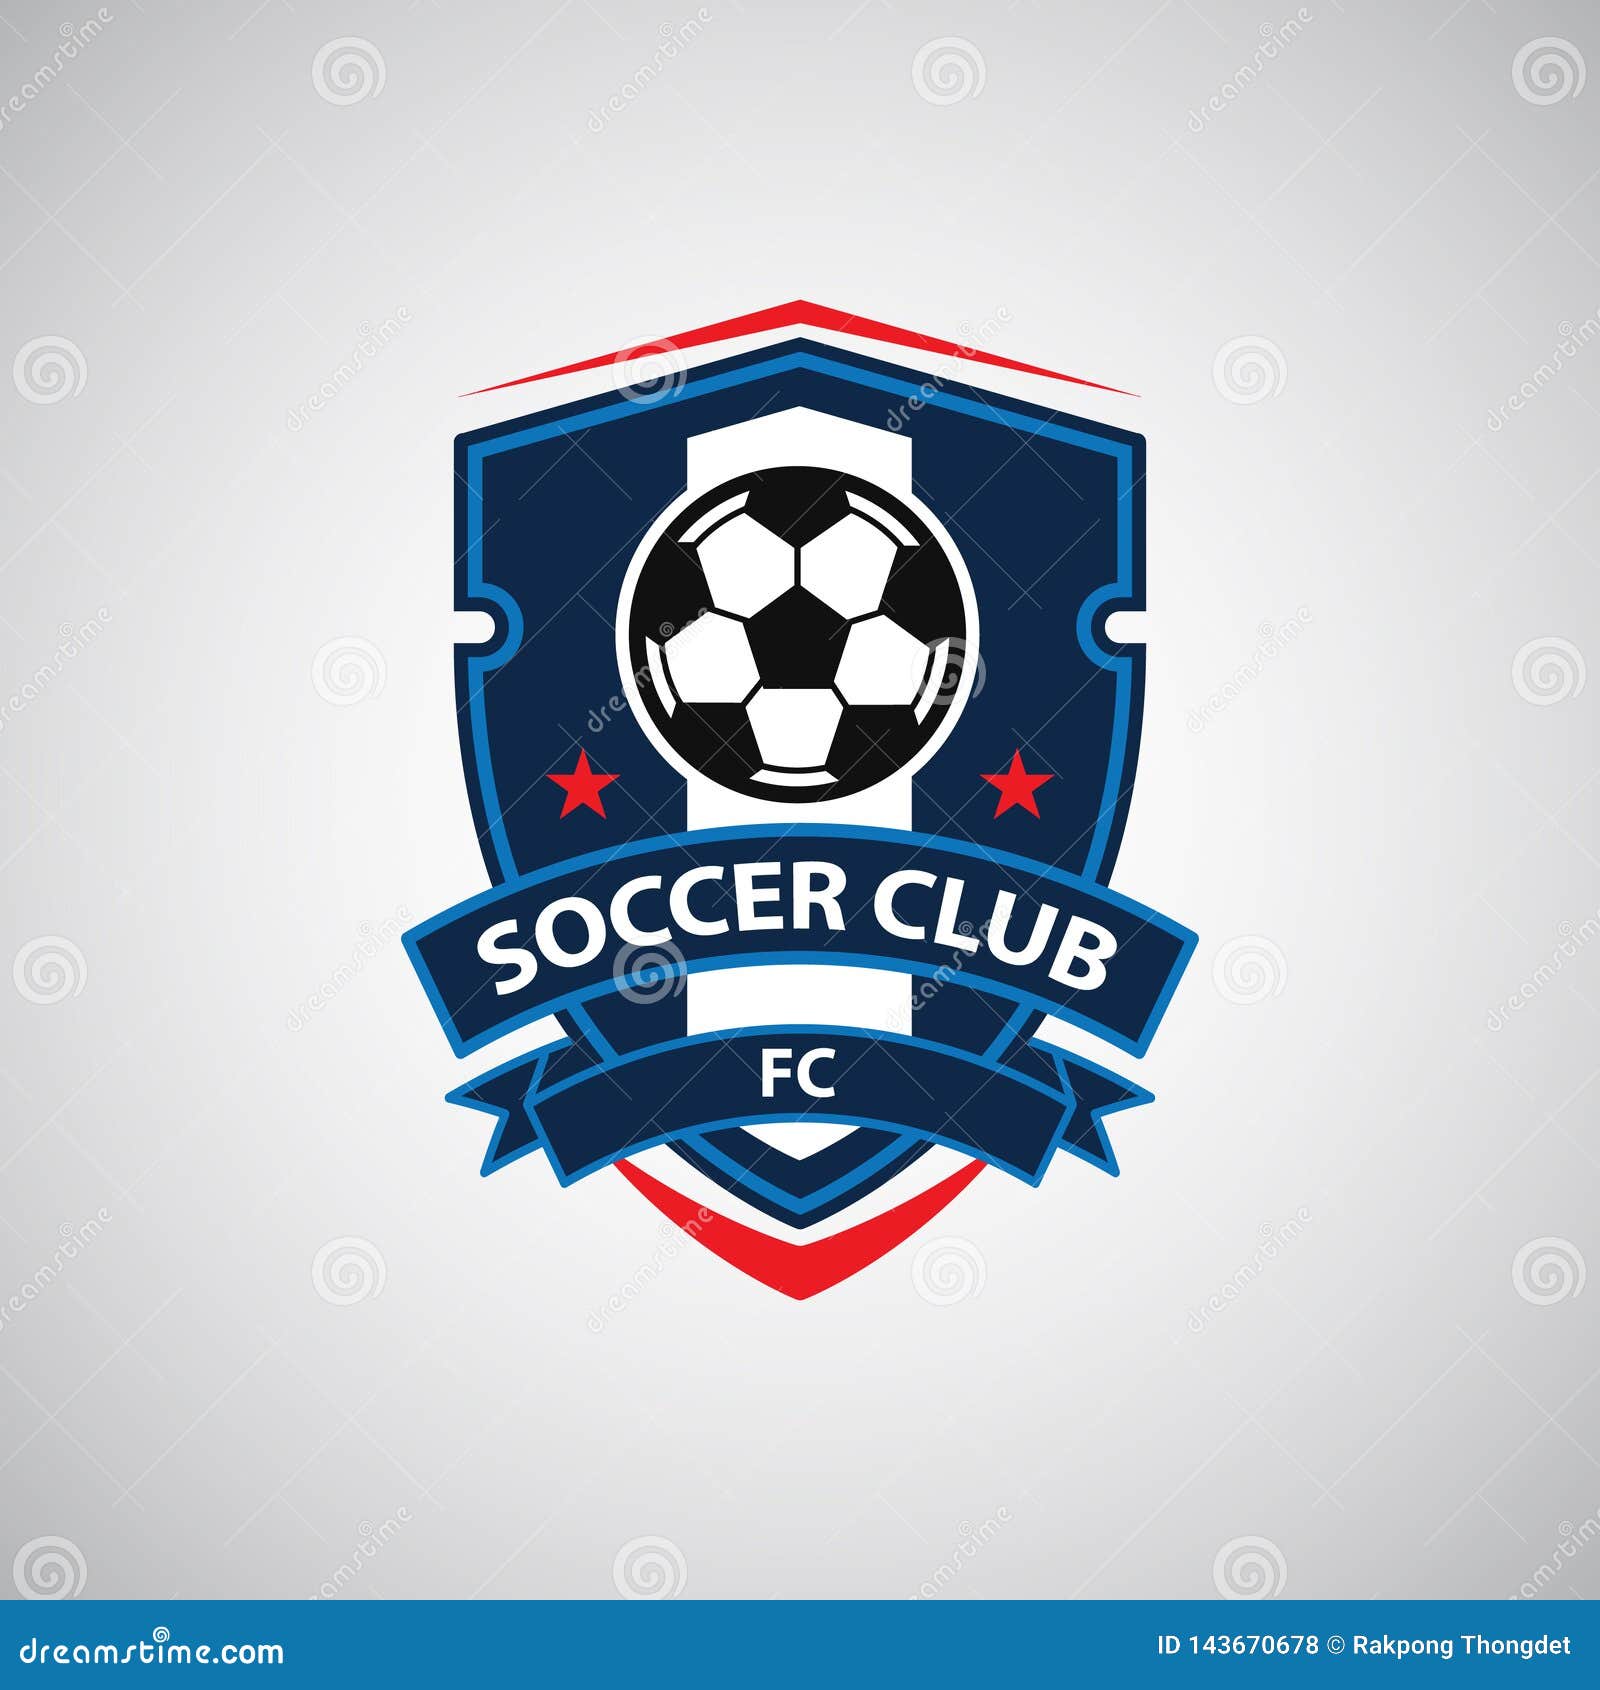 Free Vector  Football championship logo style concept design